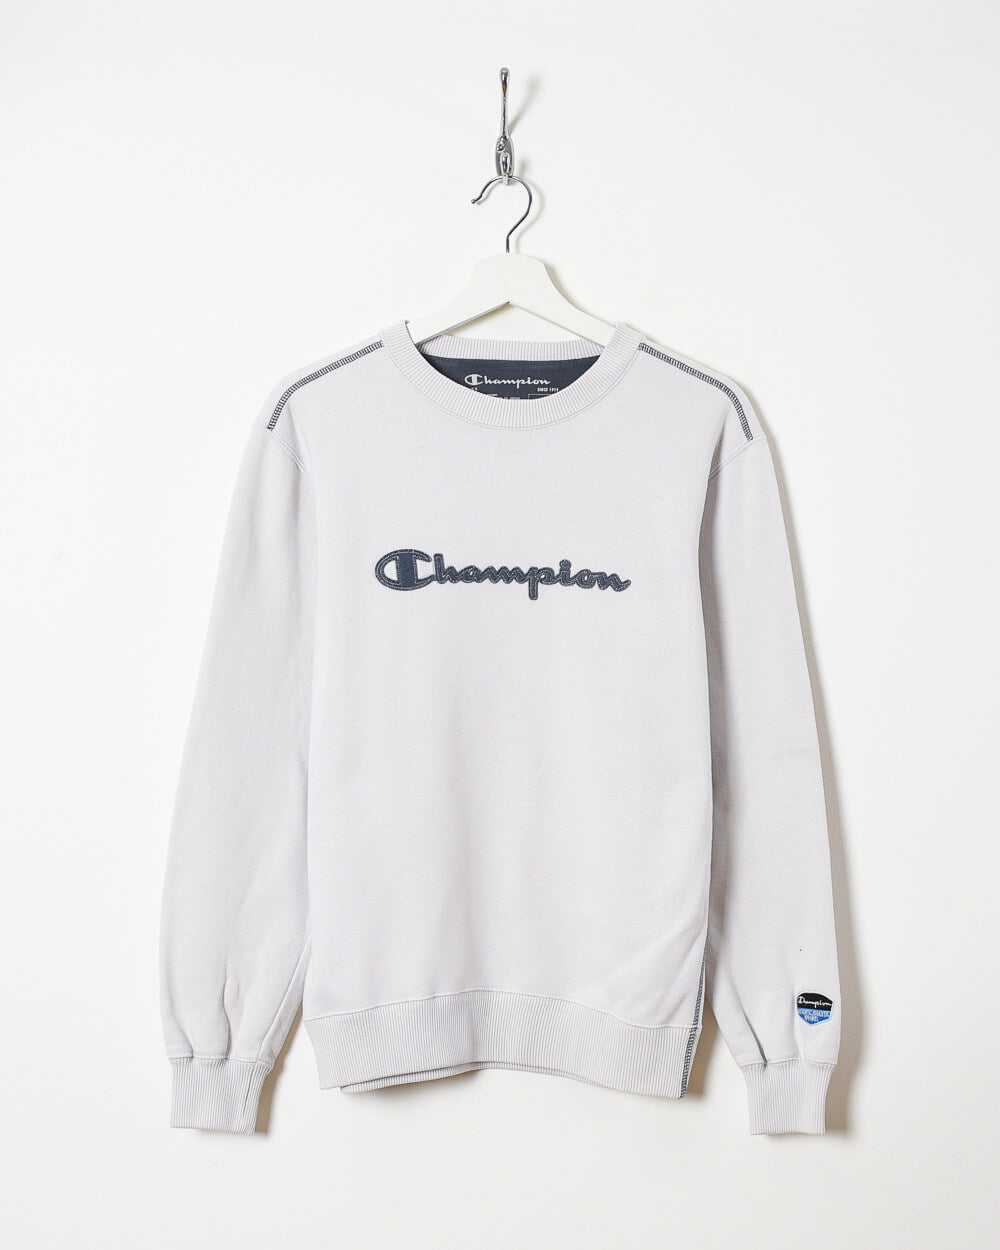 White Champion Sweatshirt - Small